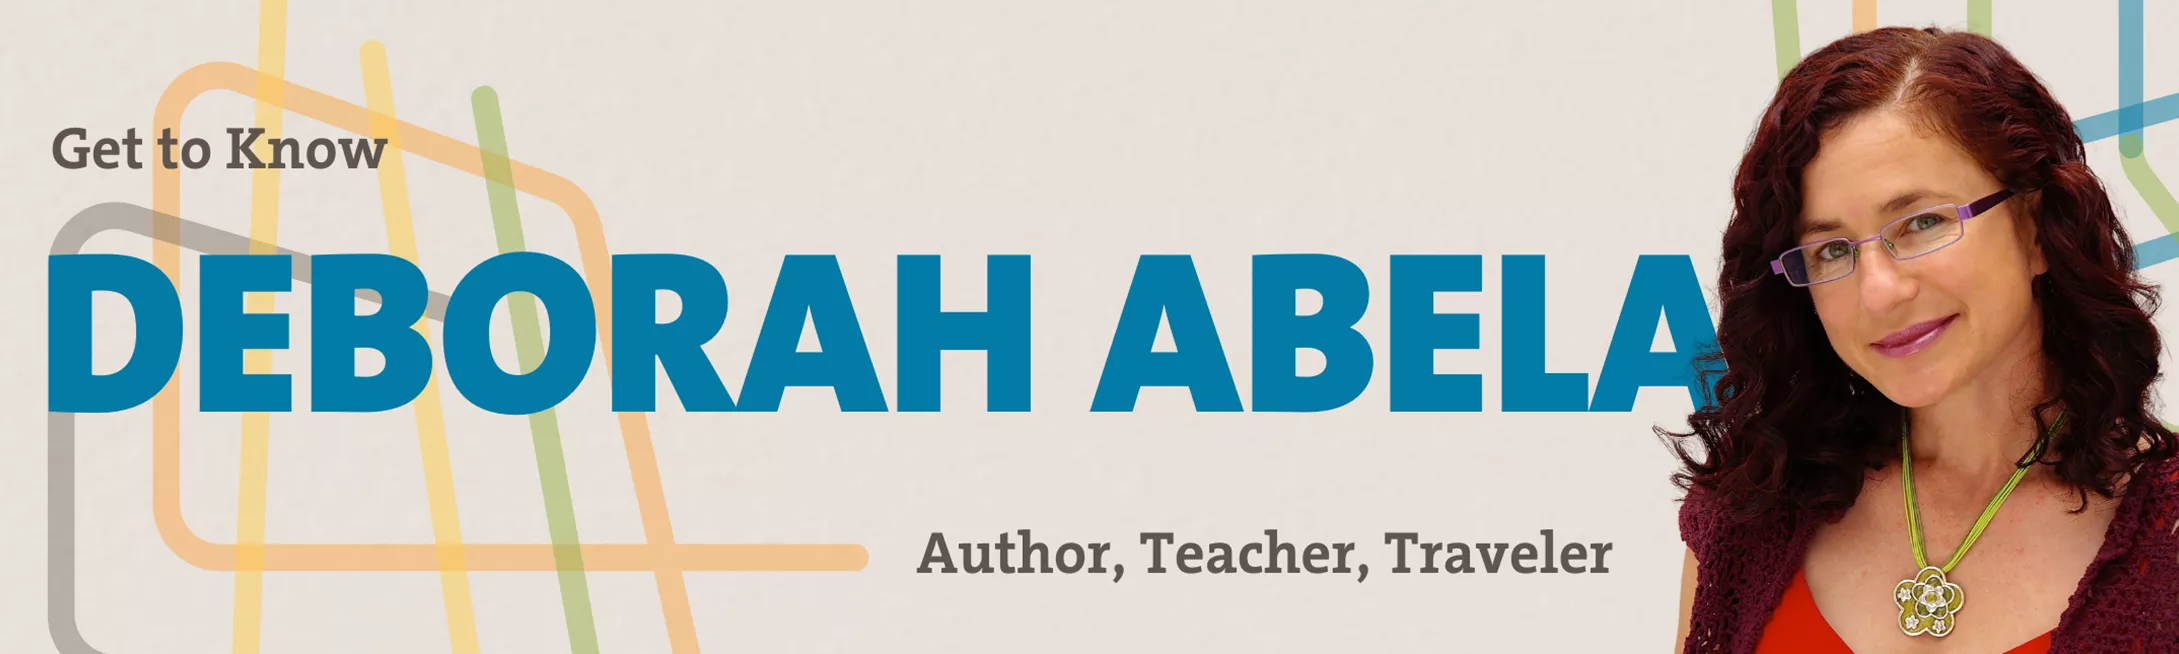 Get to Know Deborah Abela: Author, Teacher, Traveler